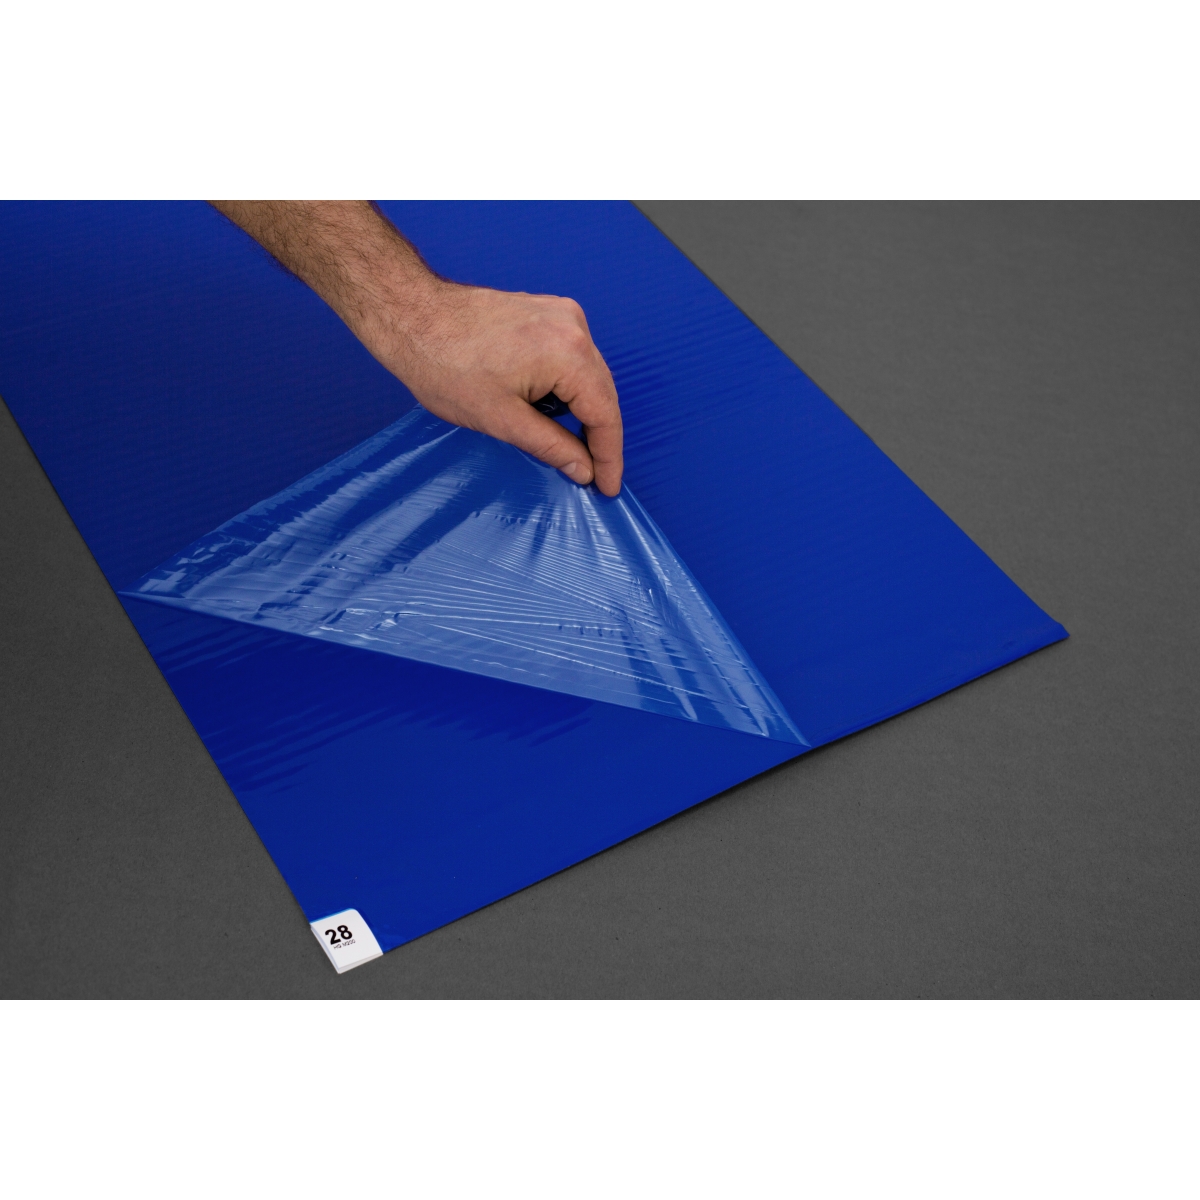 Carpet decontamination bactericidal 90 x 60 cm Mat of 30 sheets for 30 days